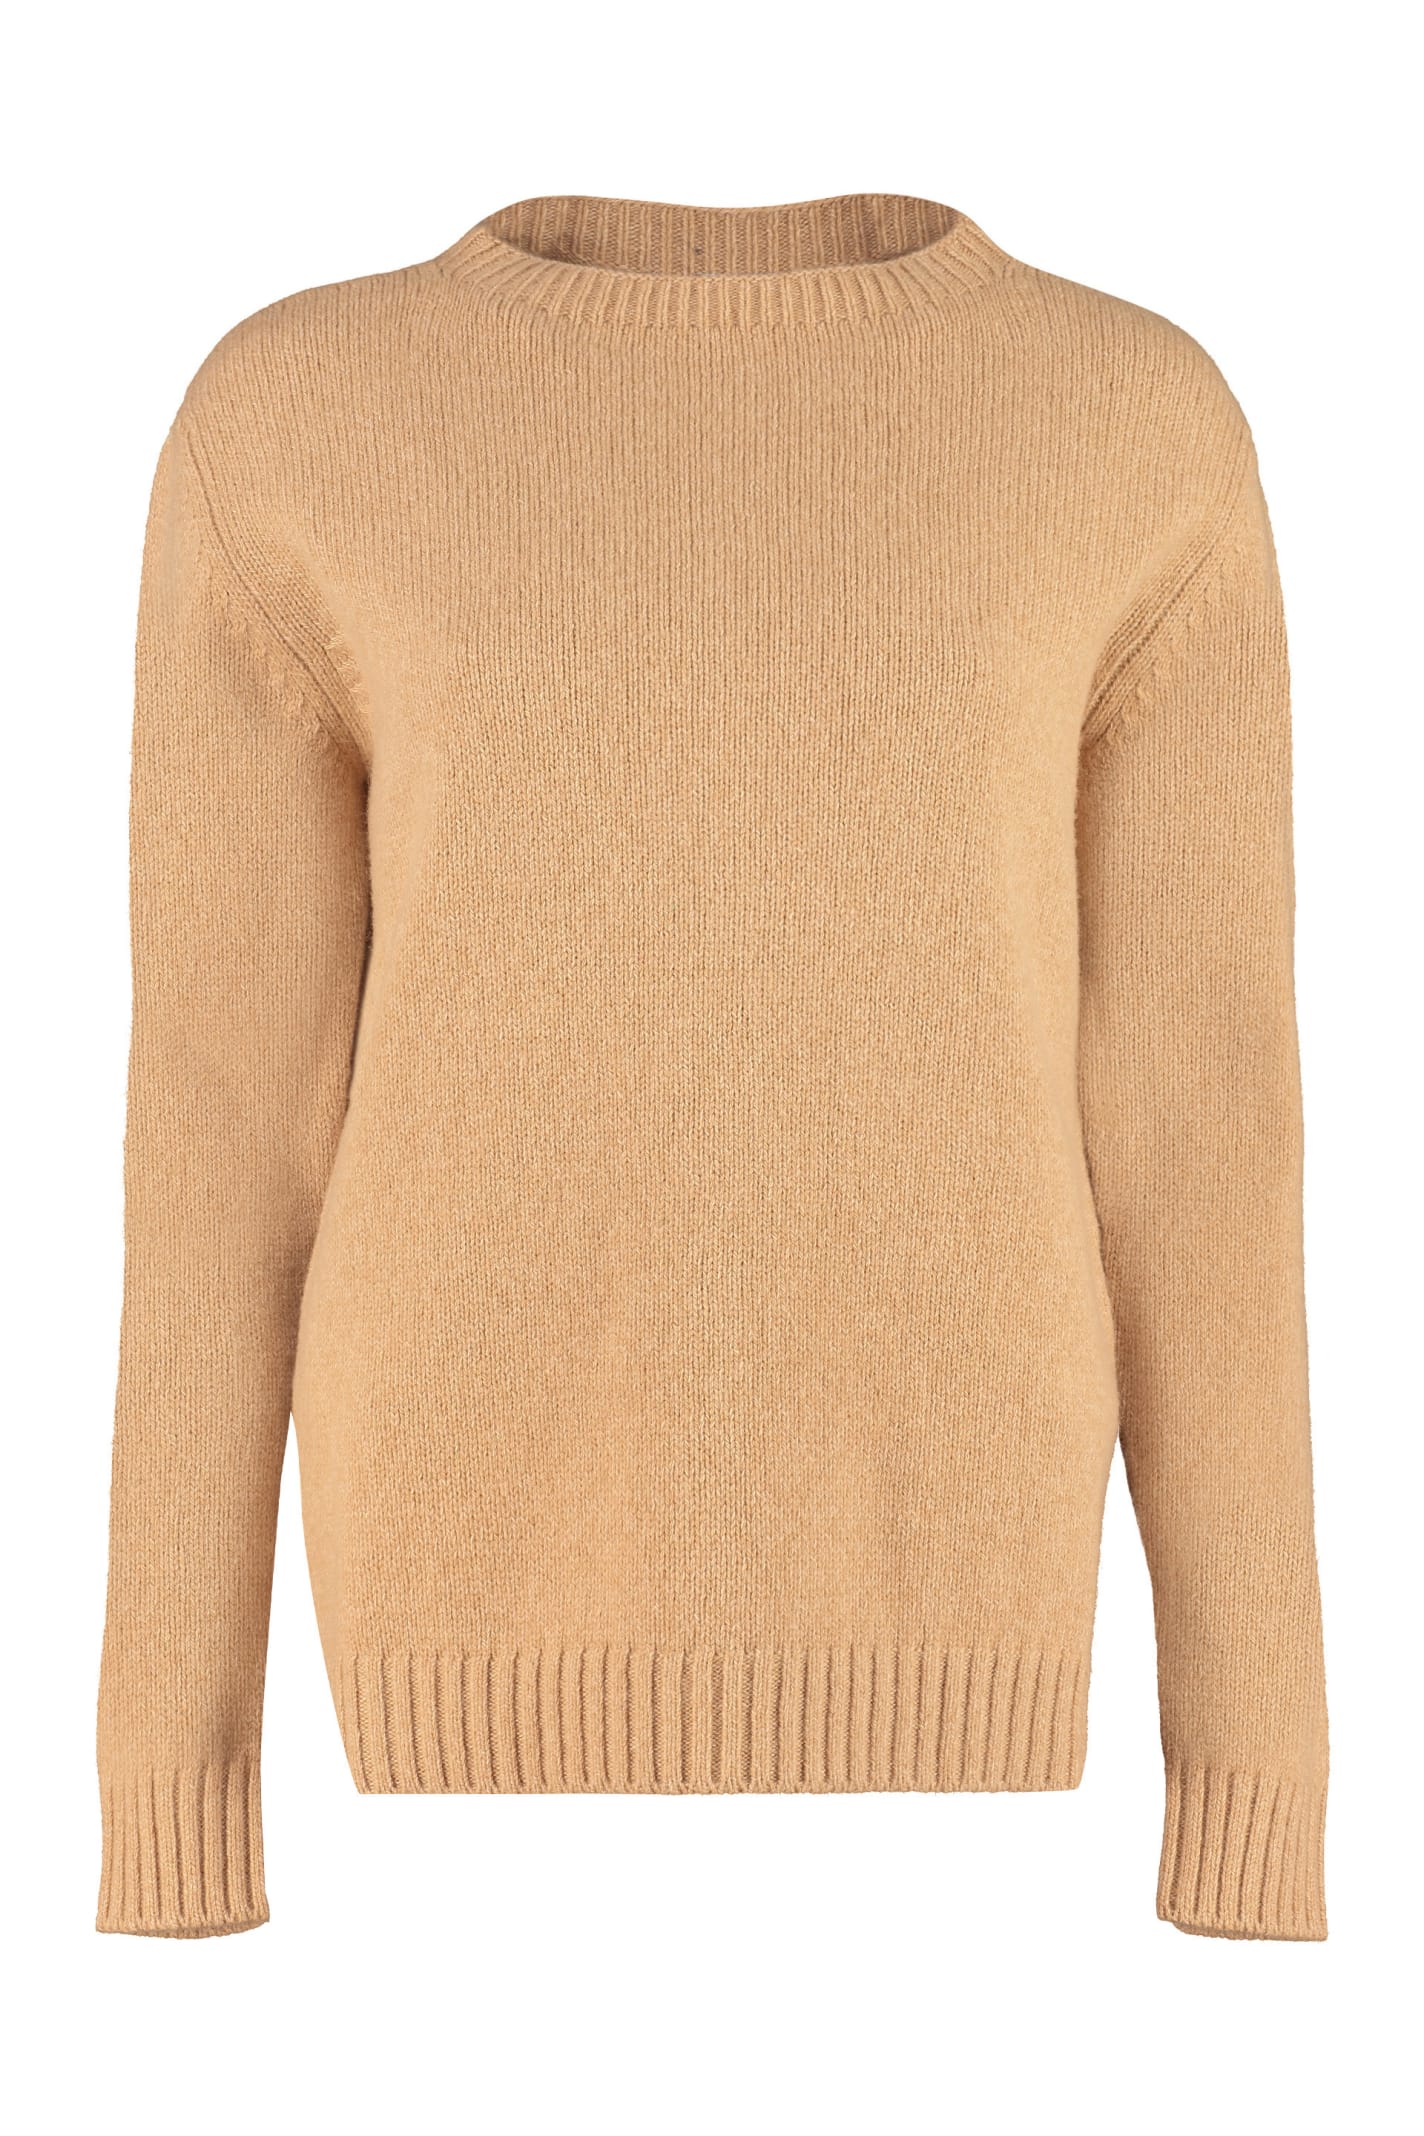 Prada Wool And Cashmere Sweater